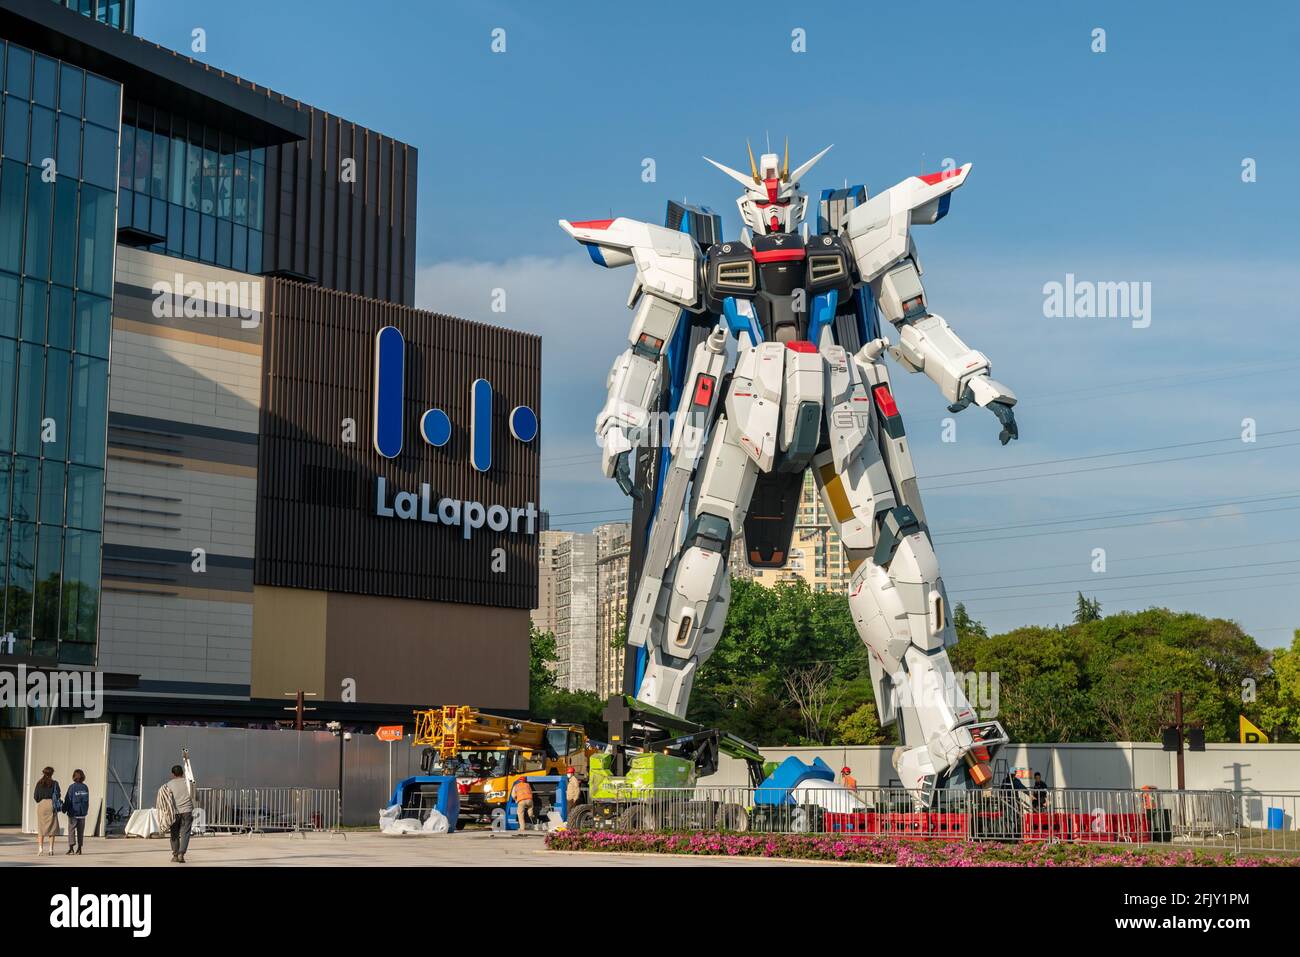 Shanghai, China. April 2021. Der 18.03 Meter hohe Gundam steht am 26. April 2021 auf dem LaLaport-platz in Shanghai, China.(Foto: TPG/cnsphotos) Quelle: TopPhoto/Alamy Live News Stockfoto